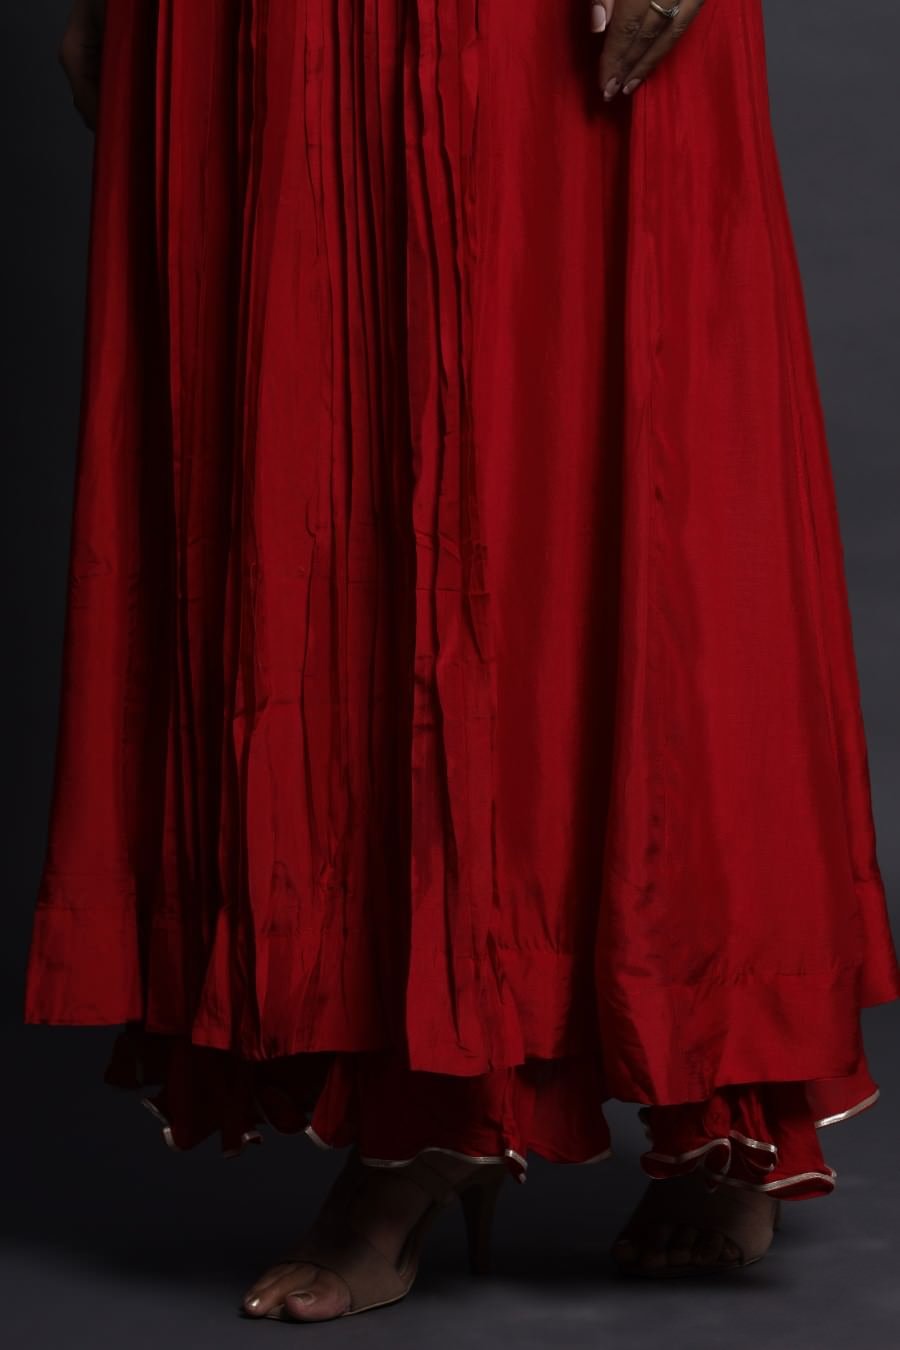 Modal Silk Red Ankle Length Dress